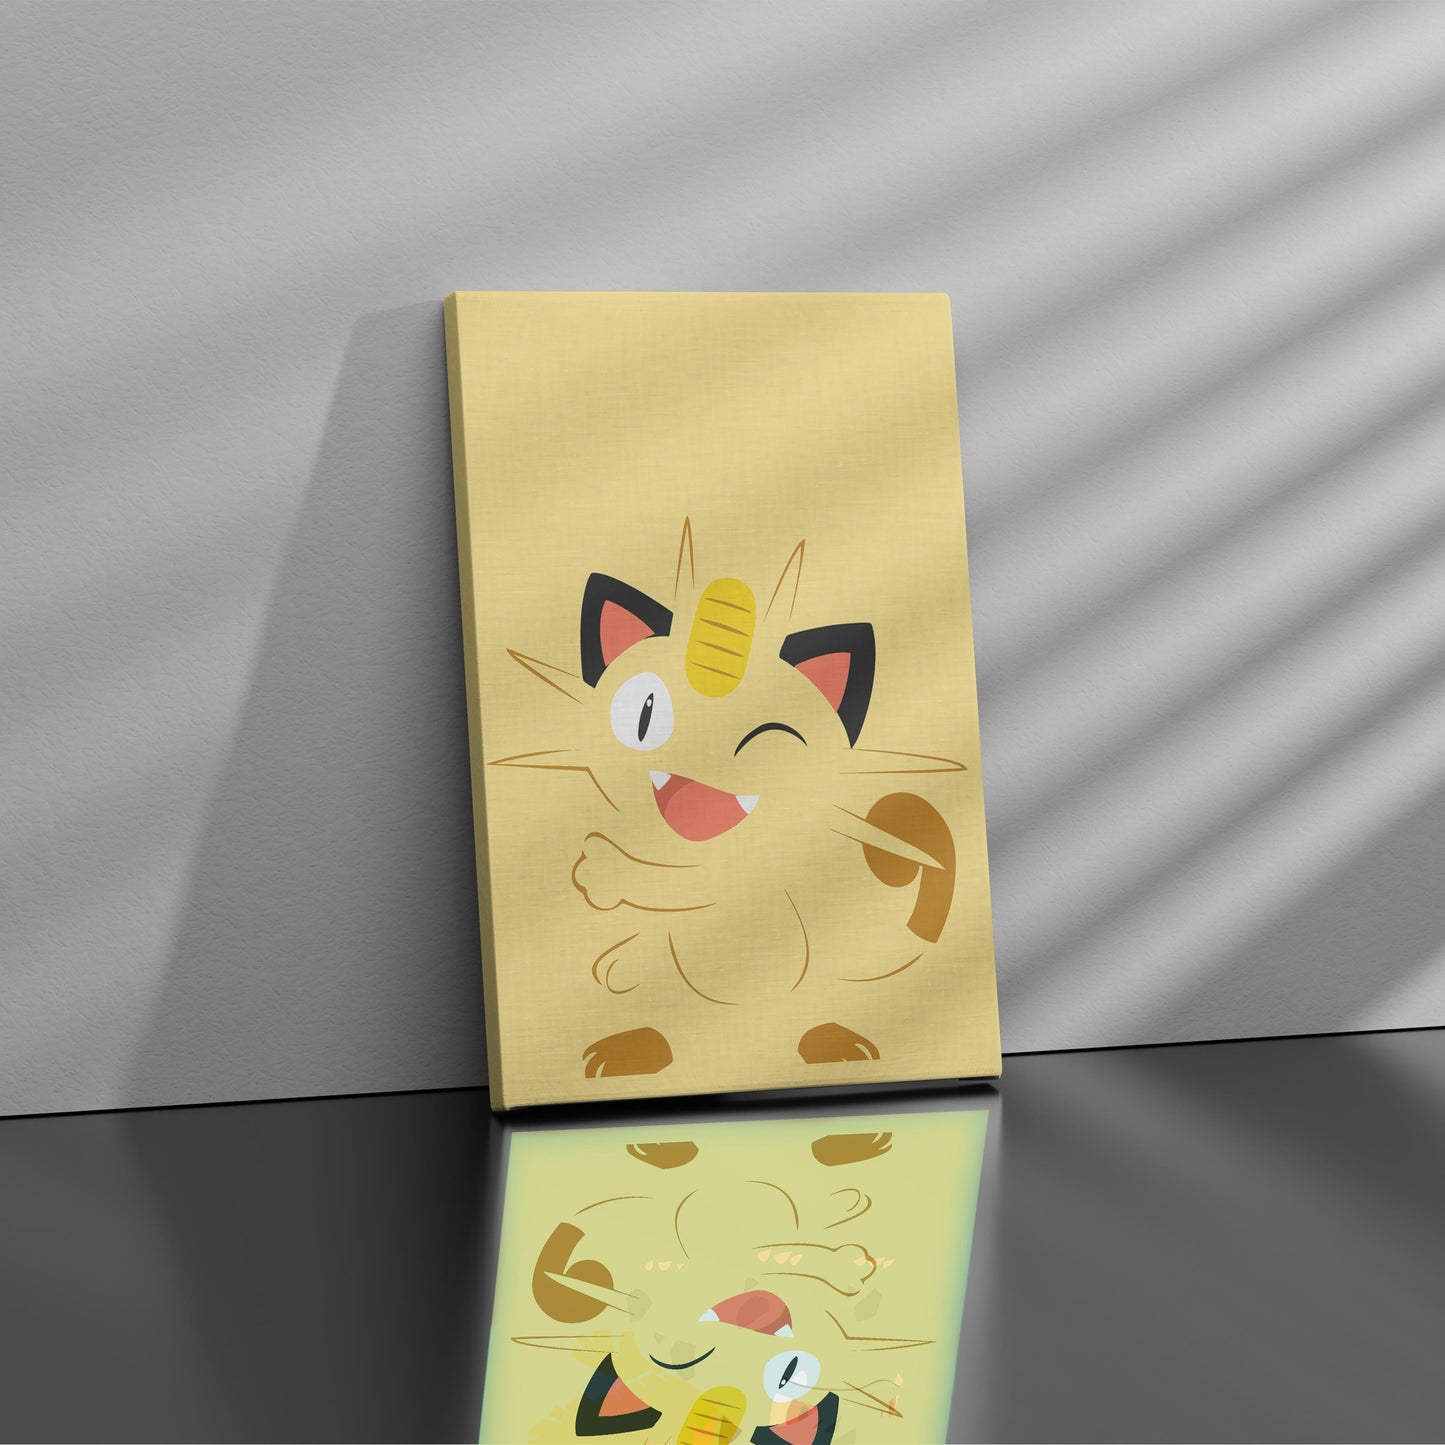 Meowth - Pokemon - Canvas